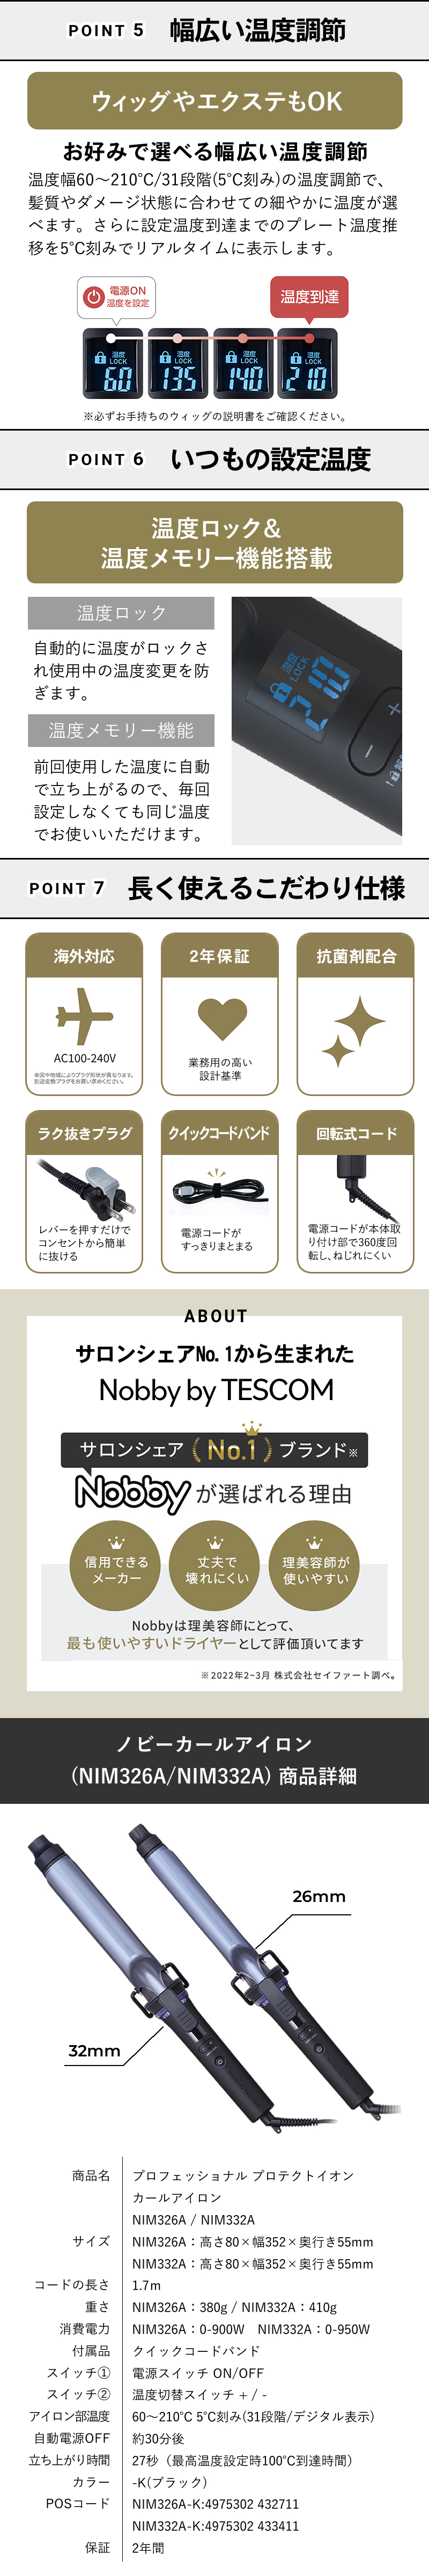 Nobby by TESCOM ノビーバイテスコム NIM326A(26mm) /332A(32mm) 